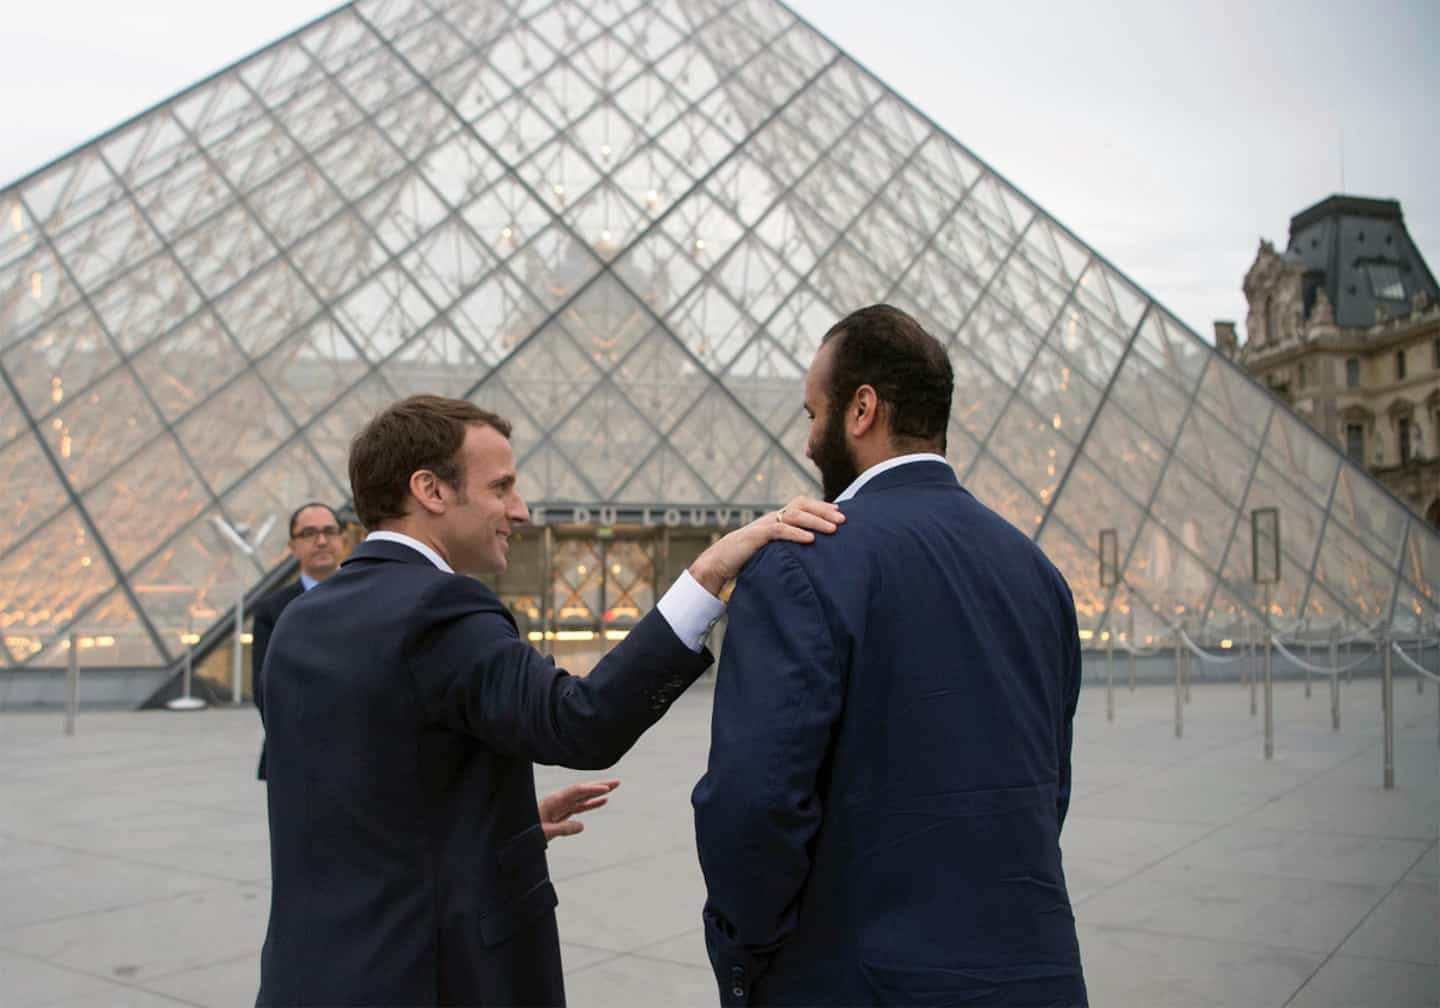 Macron receives the Saudi crown prince, who continues his "rehabilitation" after the Khashoggi affair